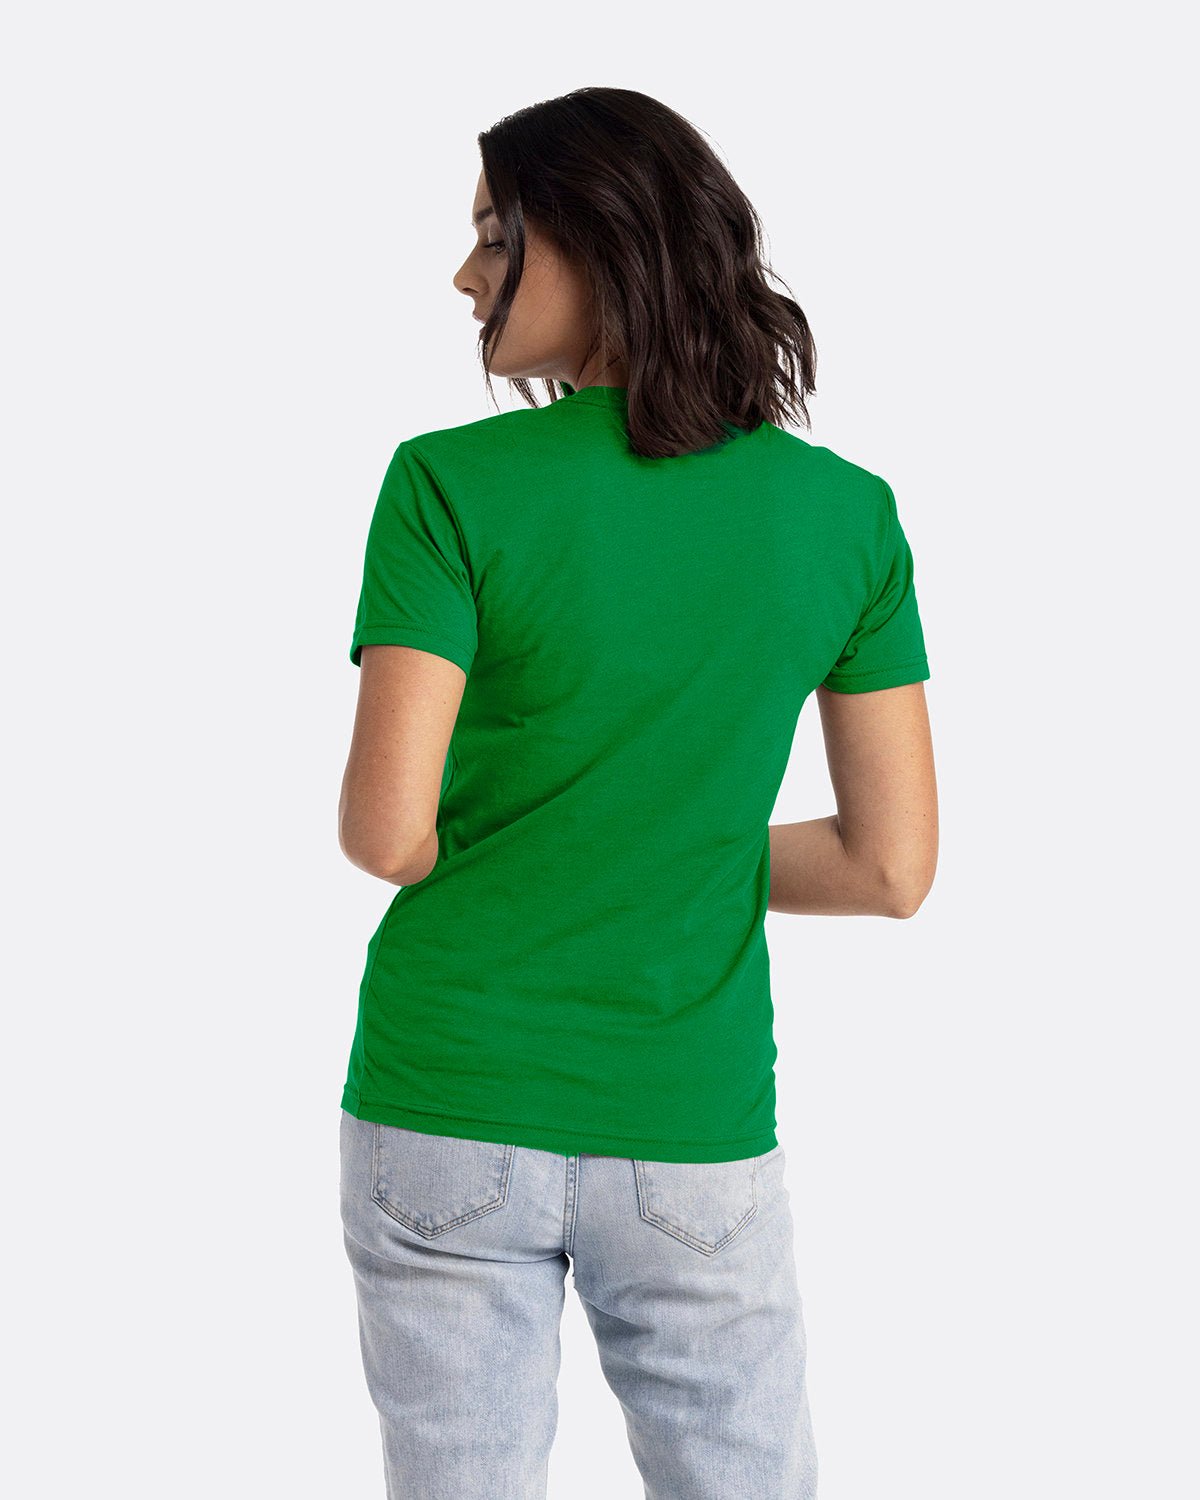 N6210-Next Level Apparel-KELLY GREEN-Next Level Apparel-T-Shirts-2